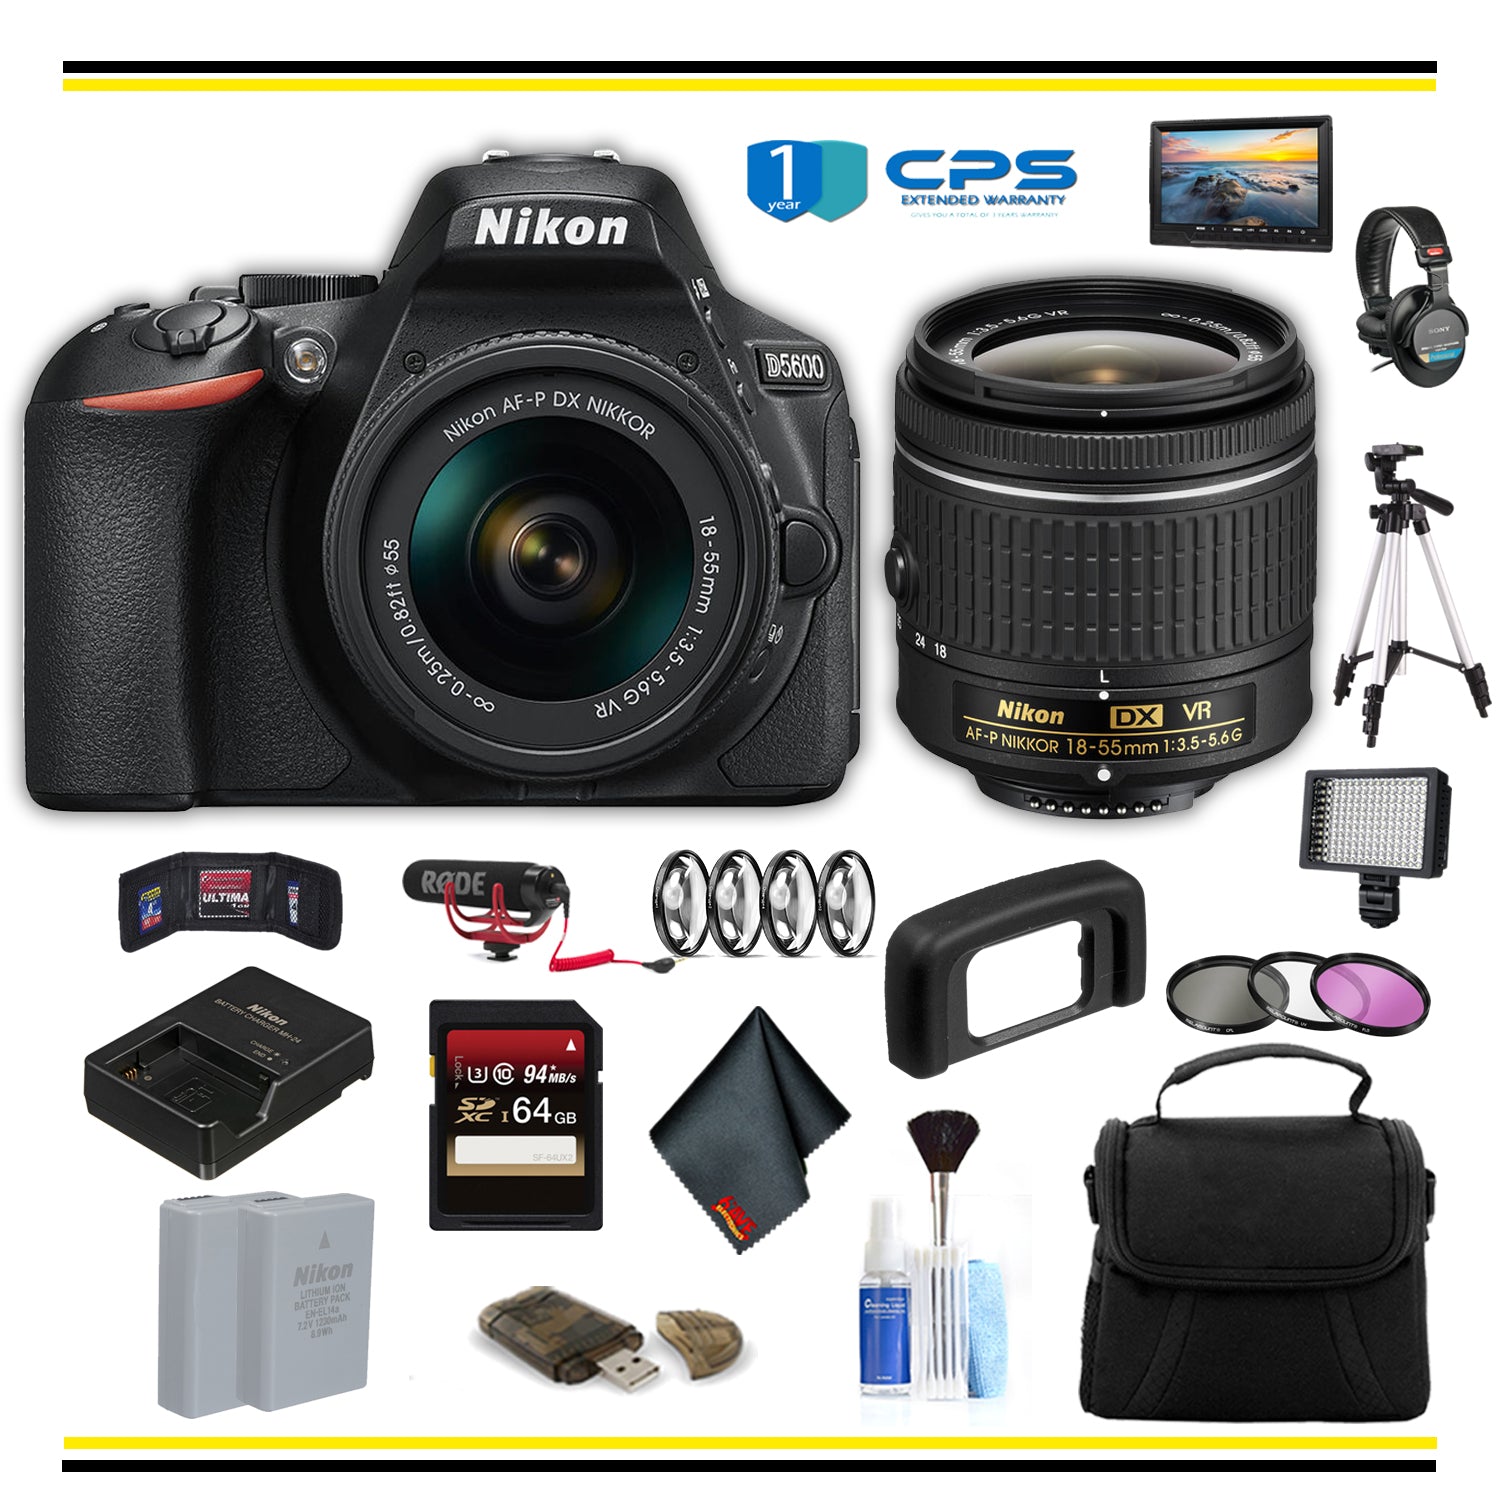 Nikon D5600 DSLR Camera with 18-55mm Lens (1576 ) Advanced Bundle W/ Bag, Extra Battery, LED Light, Mic, Filters and More- (International Model )